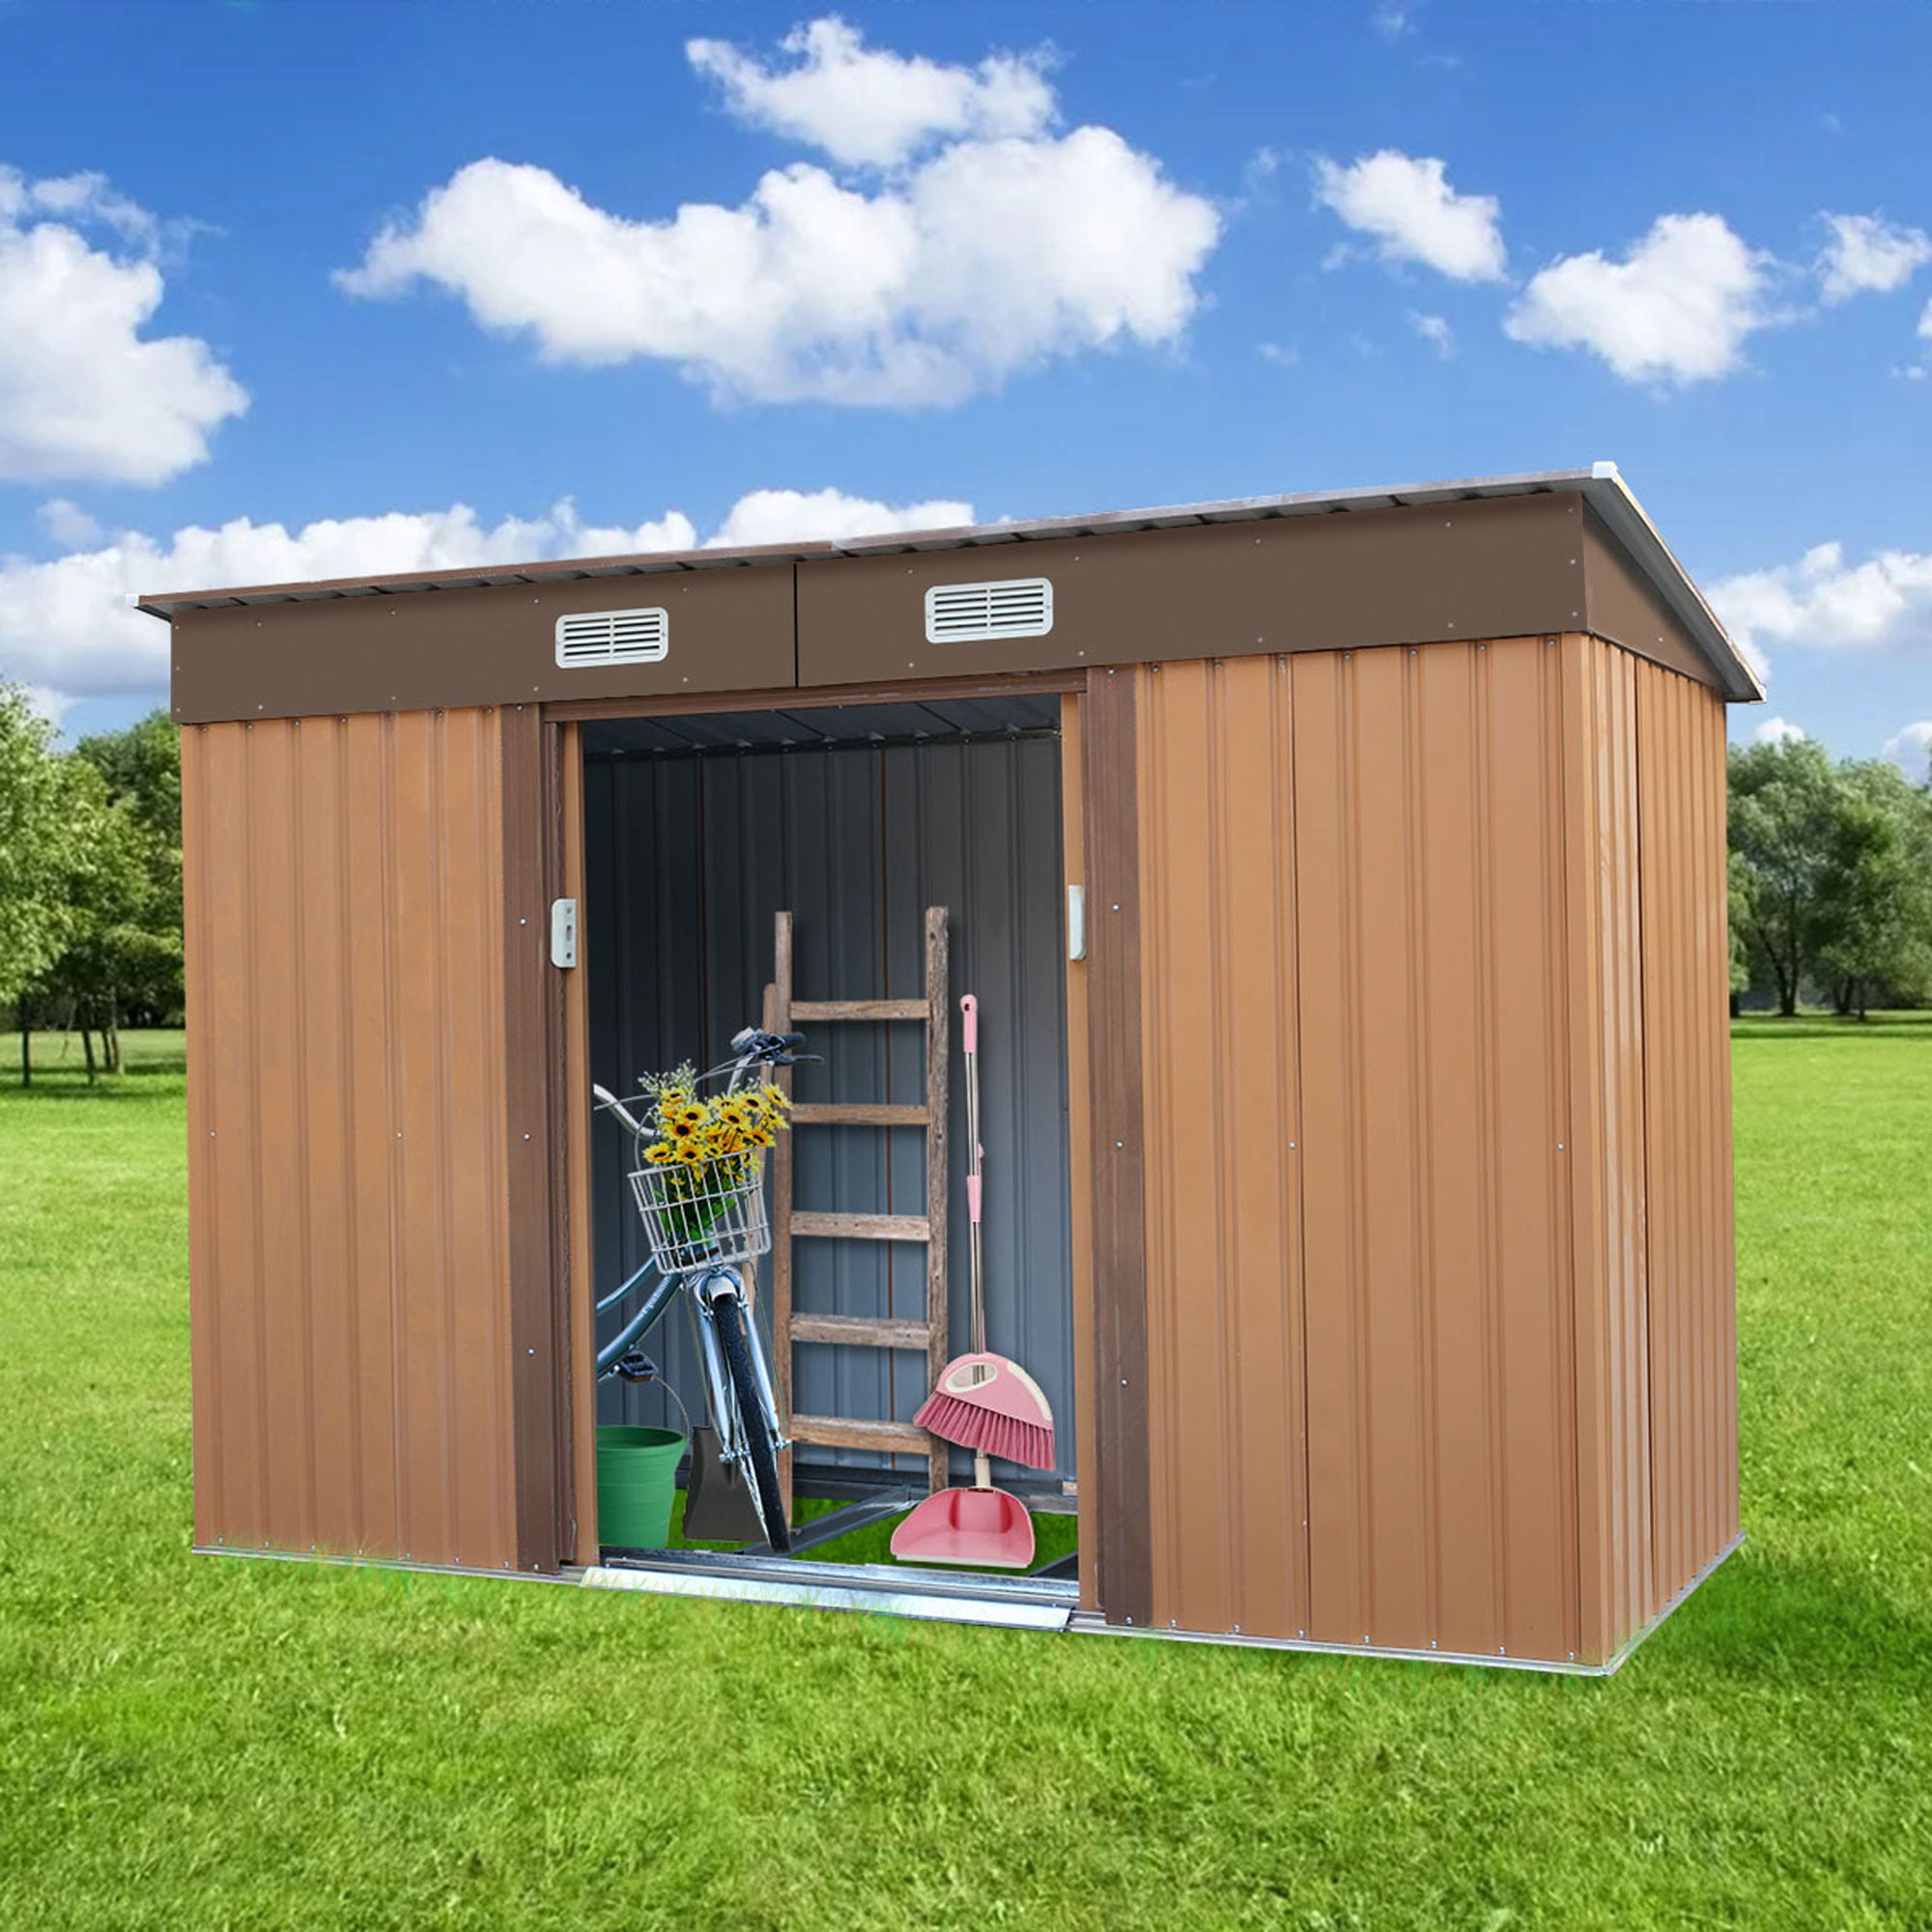 Jaxpety 9' x 4' Outdoor Backyard Garden Metal Storage Shed for Utility 